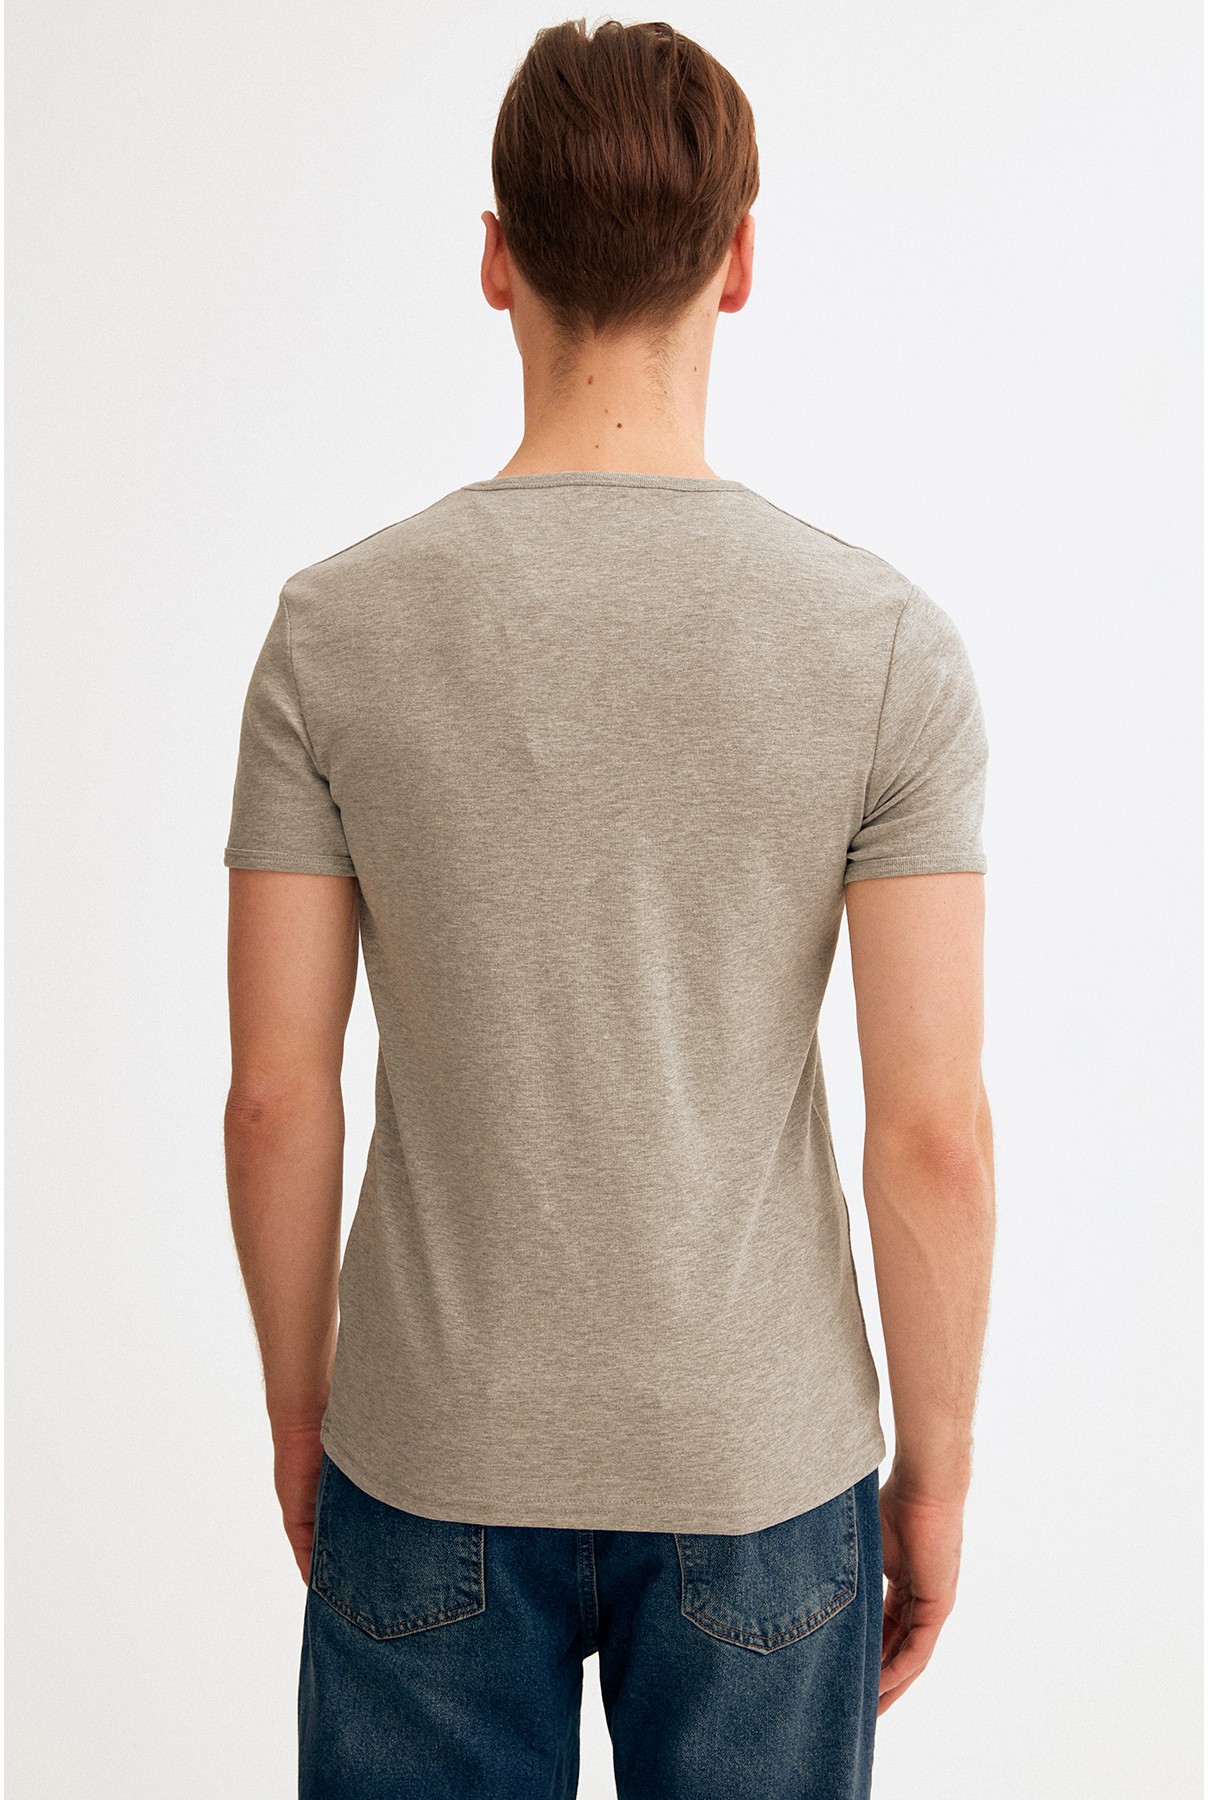 Plain gray T-shirt